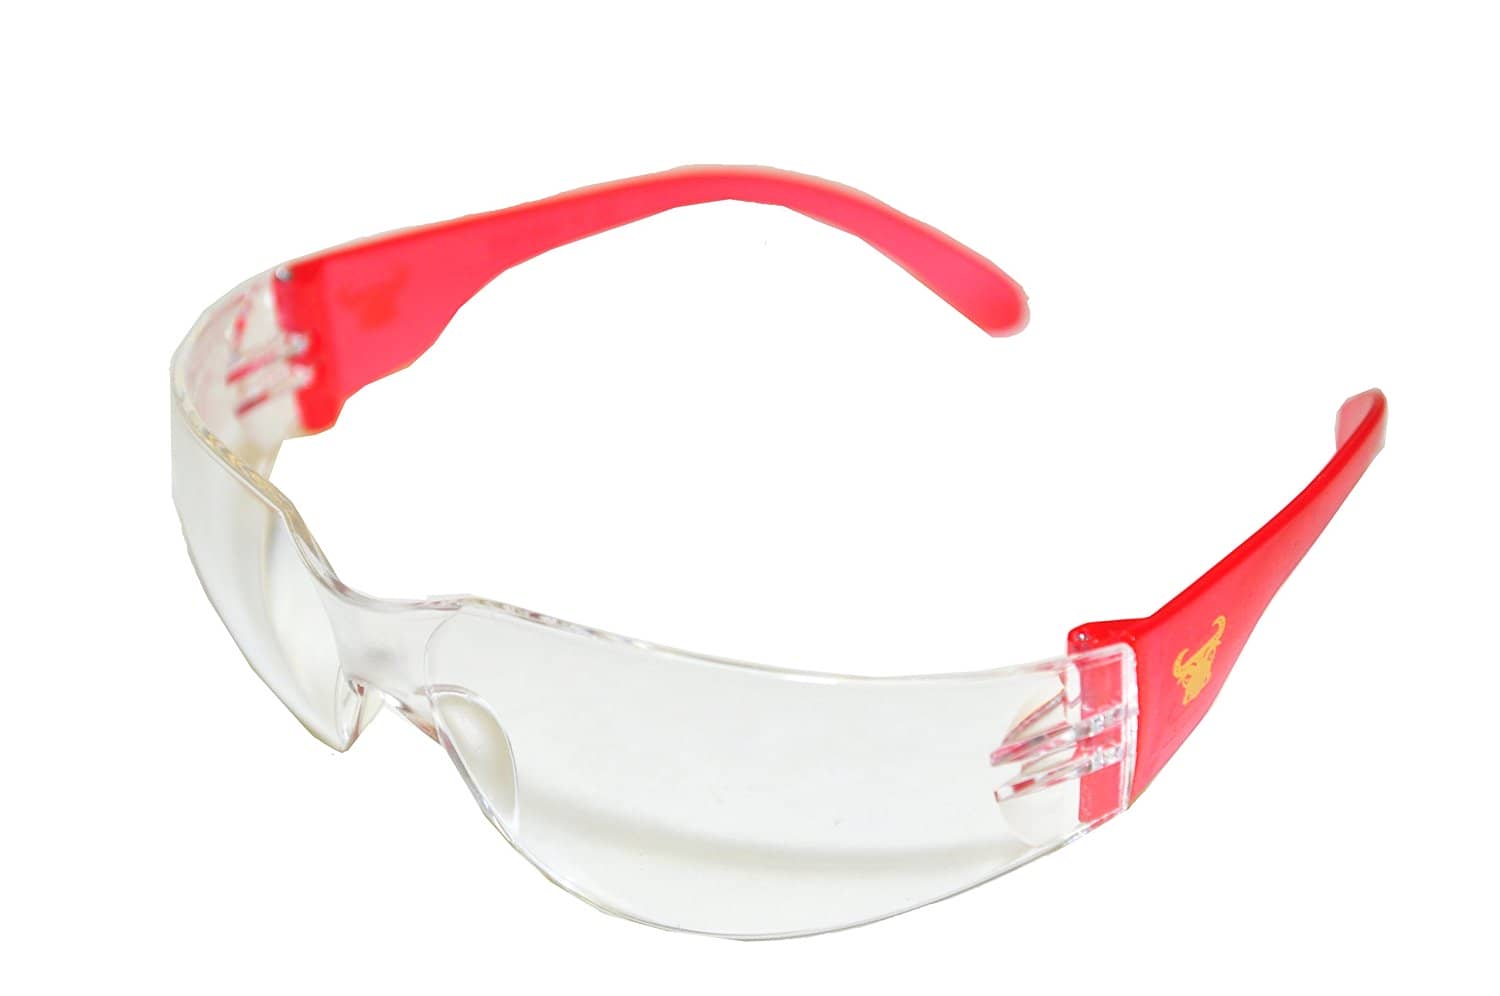 10 Best Safety Glasses